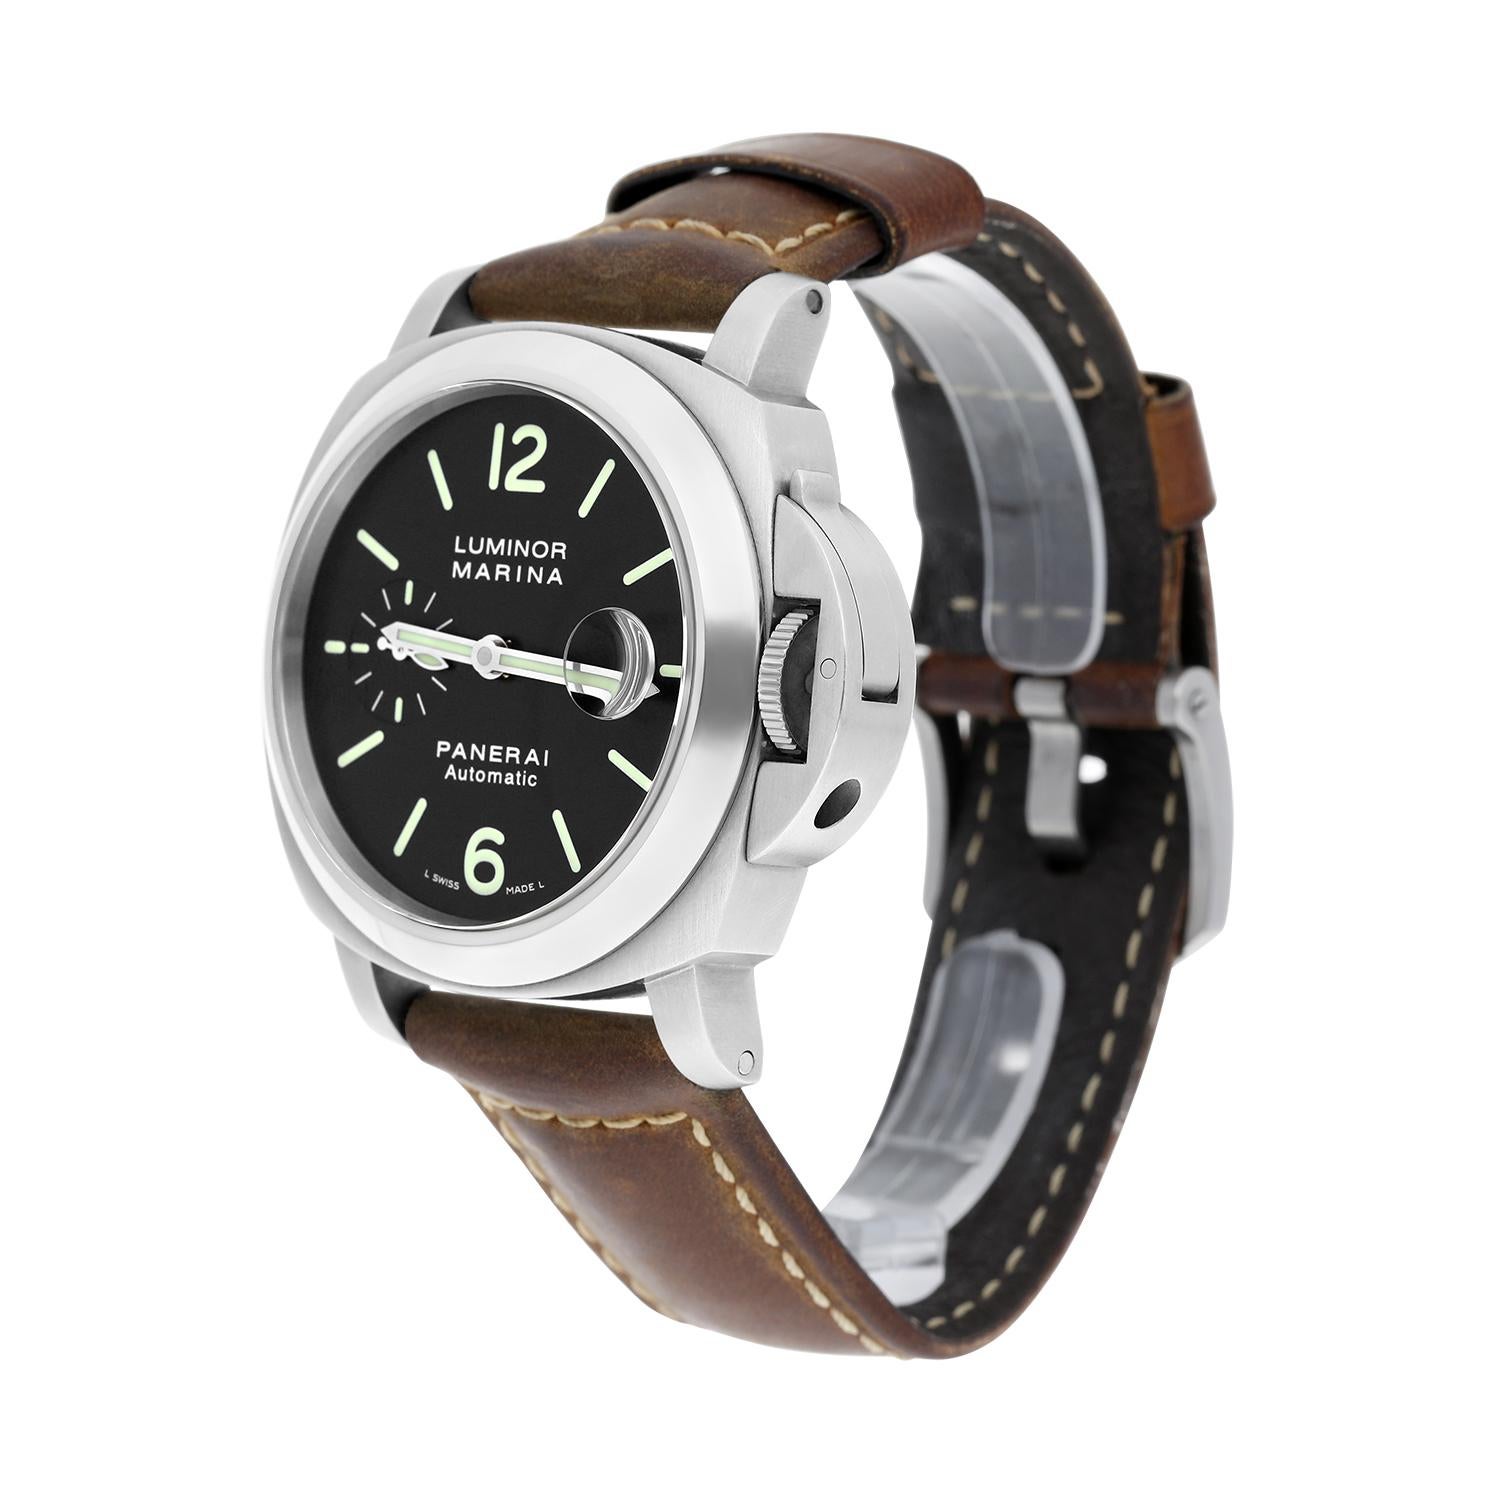 Panerai Luminor Marina PAM00104 Small Second Date Automatic Men's Watch For Sale 1